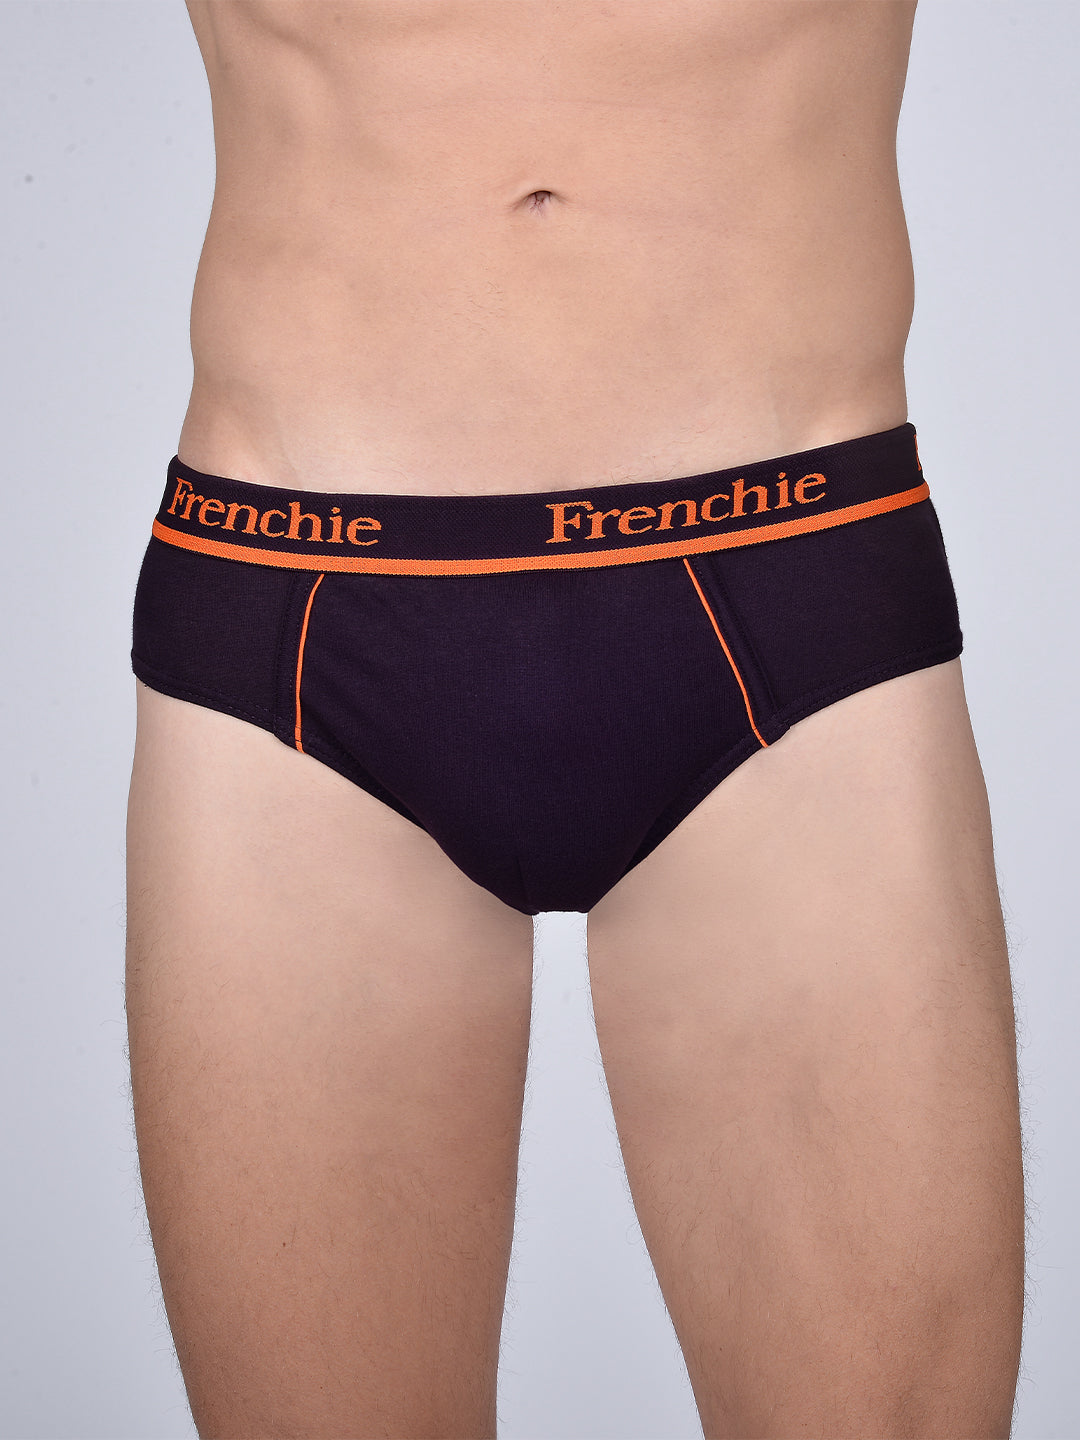 Plain VIP Frenchie Pro Men's Cotton Briefs-Assorted Colours at Rs